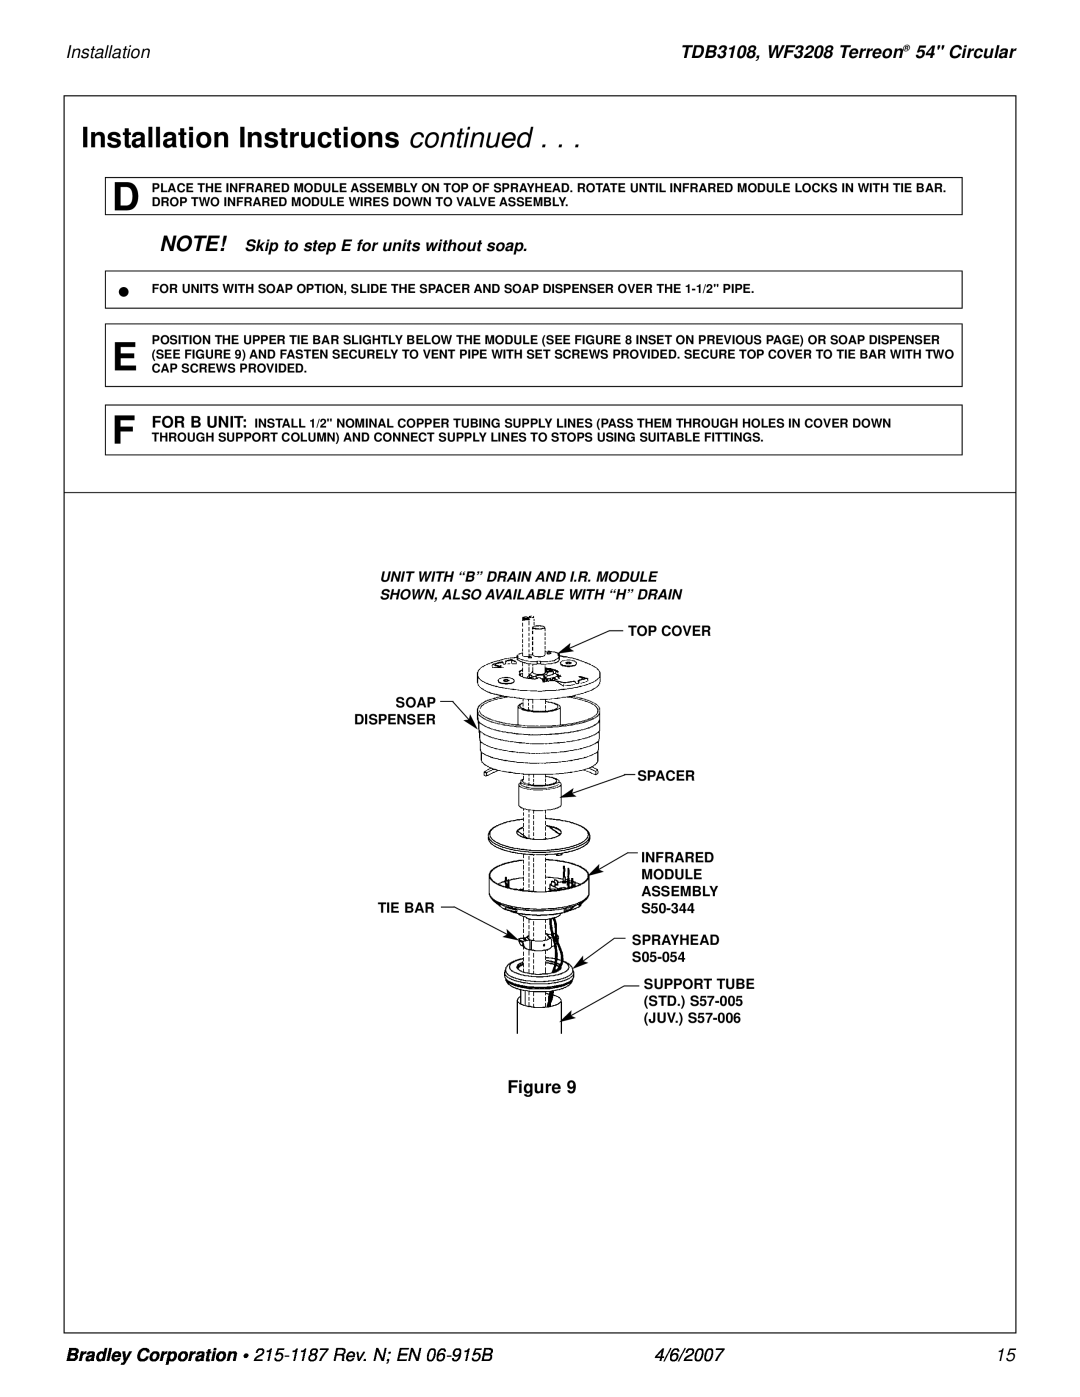 Bradley Smoker installation manual Installation Instructions continued, TDB3108, WF3208 Terreon 54 Circular, 4/6/2007 